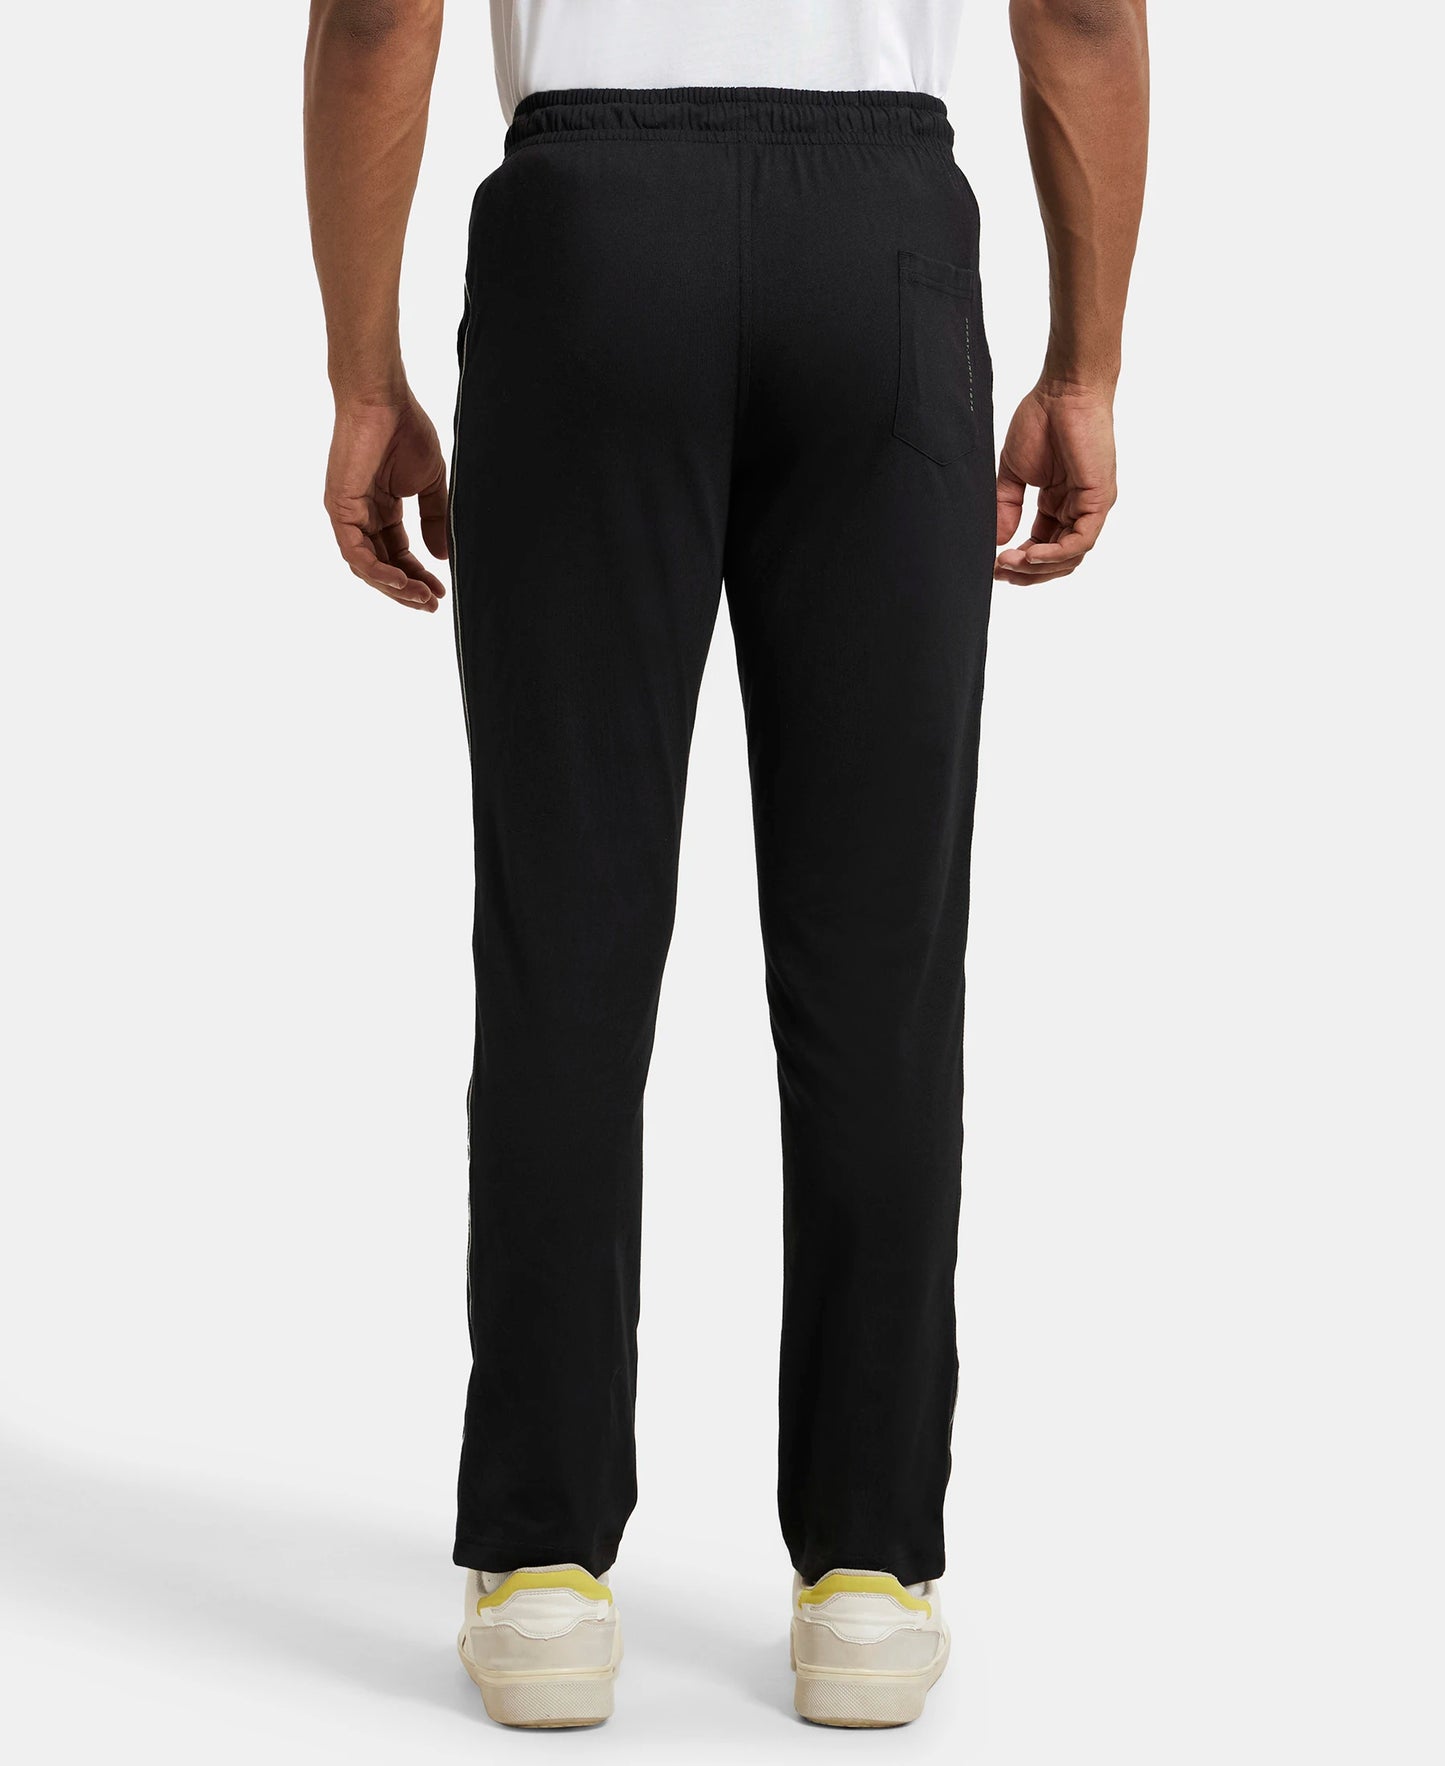 Super Combed Cotton Rich Slim Fit Trackpant with Side and Back Pockets - Black & Grey Melange-3